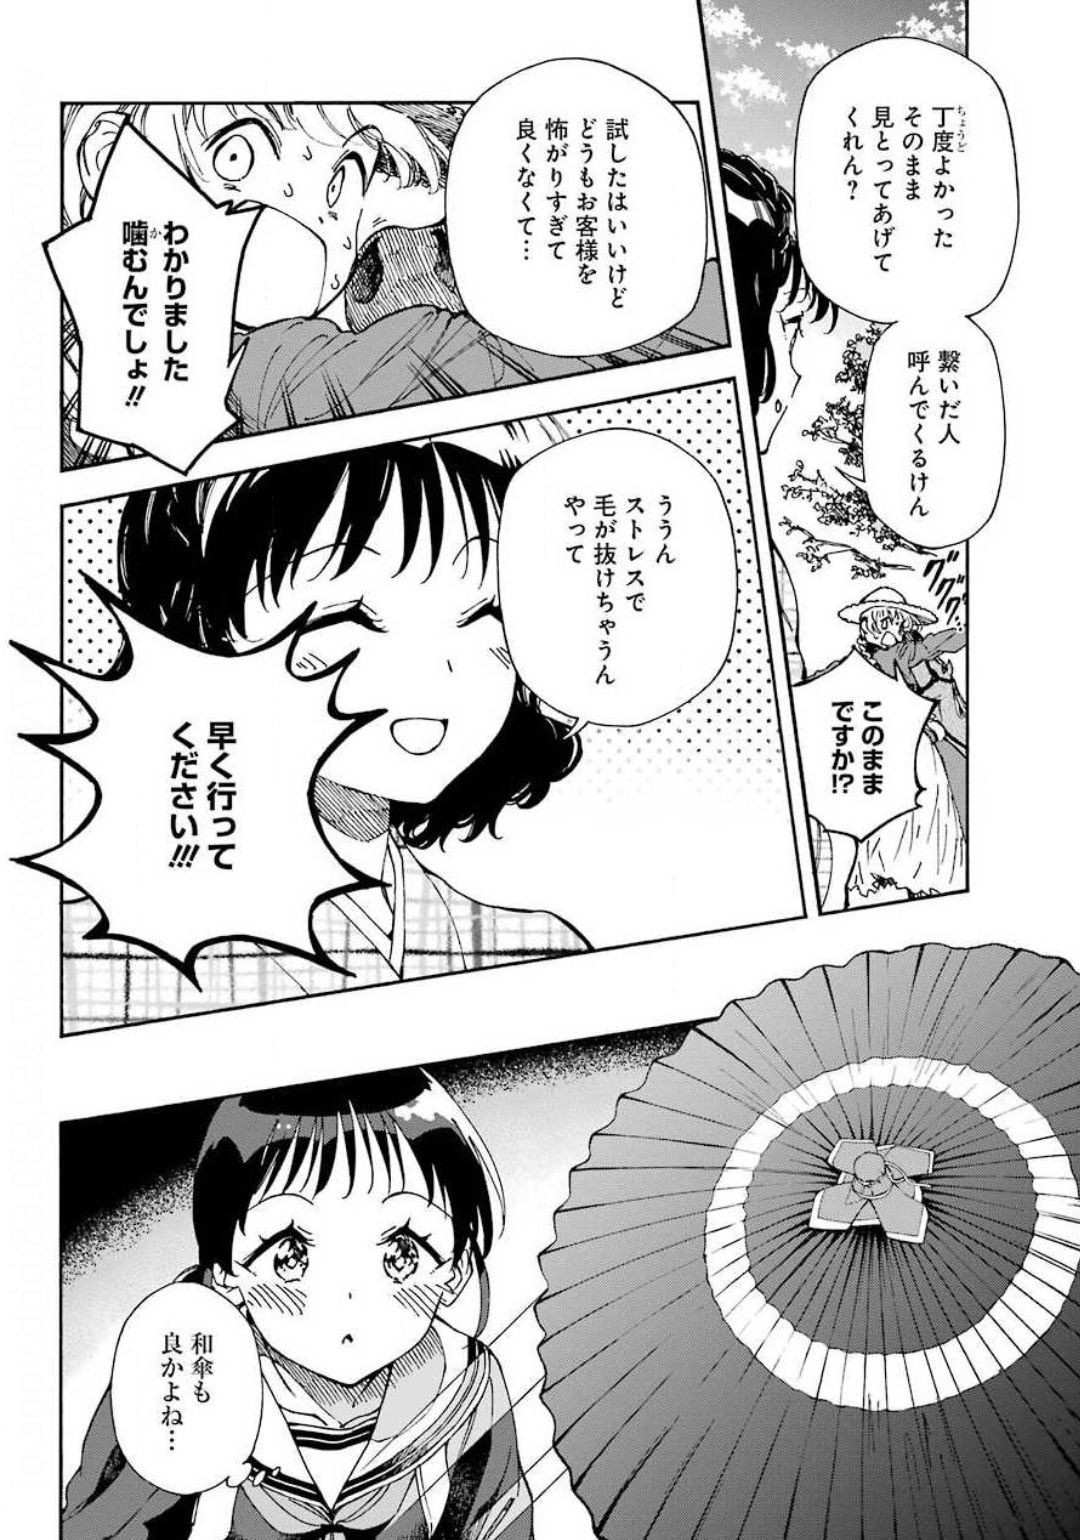 Hotomeku-kakashi - Chapter 04-2 - Page 5